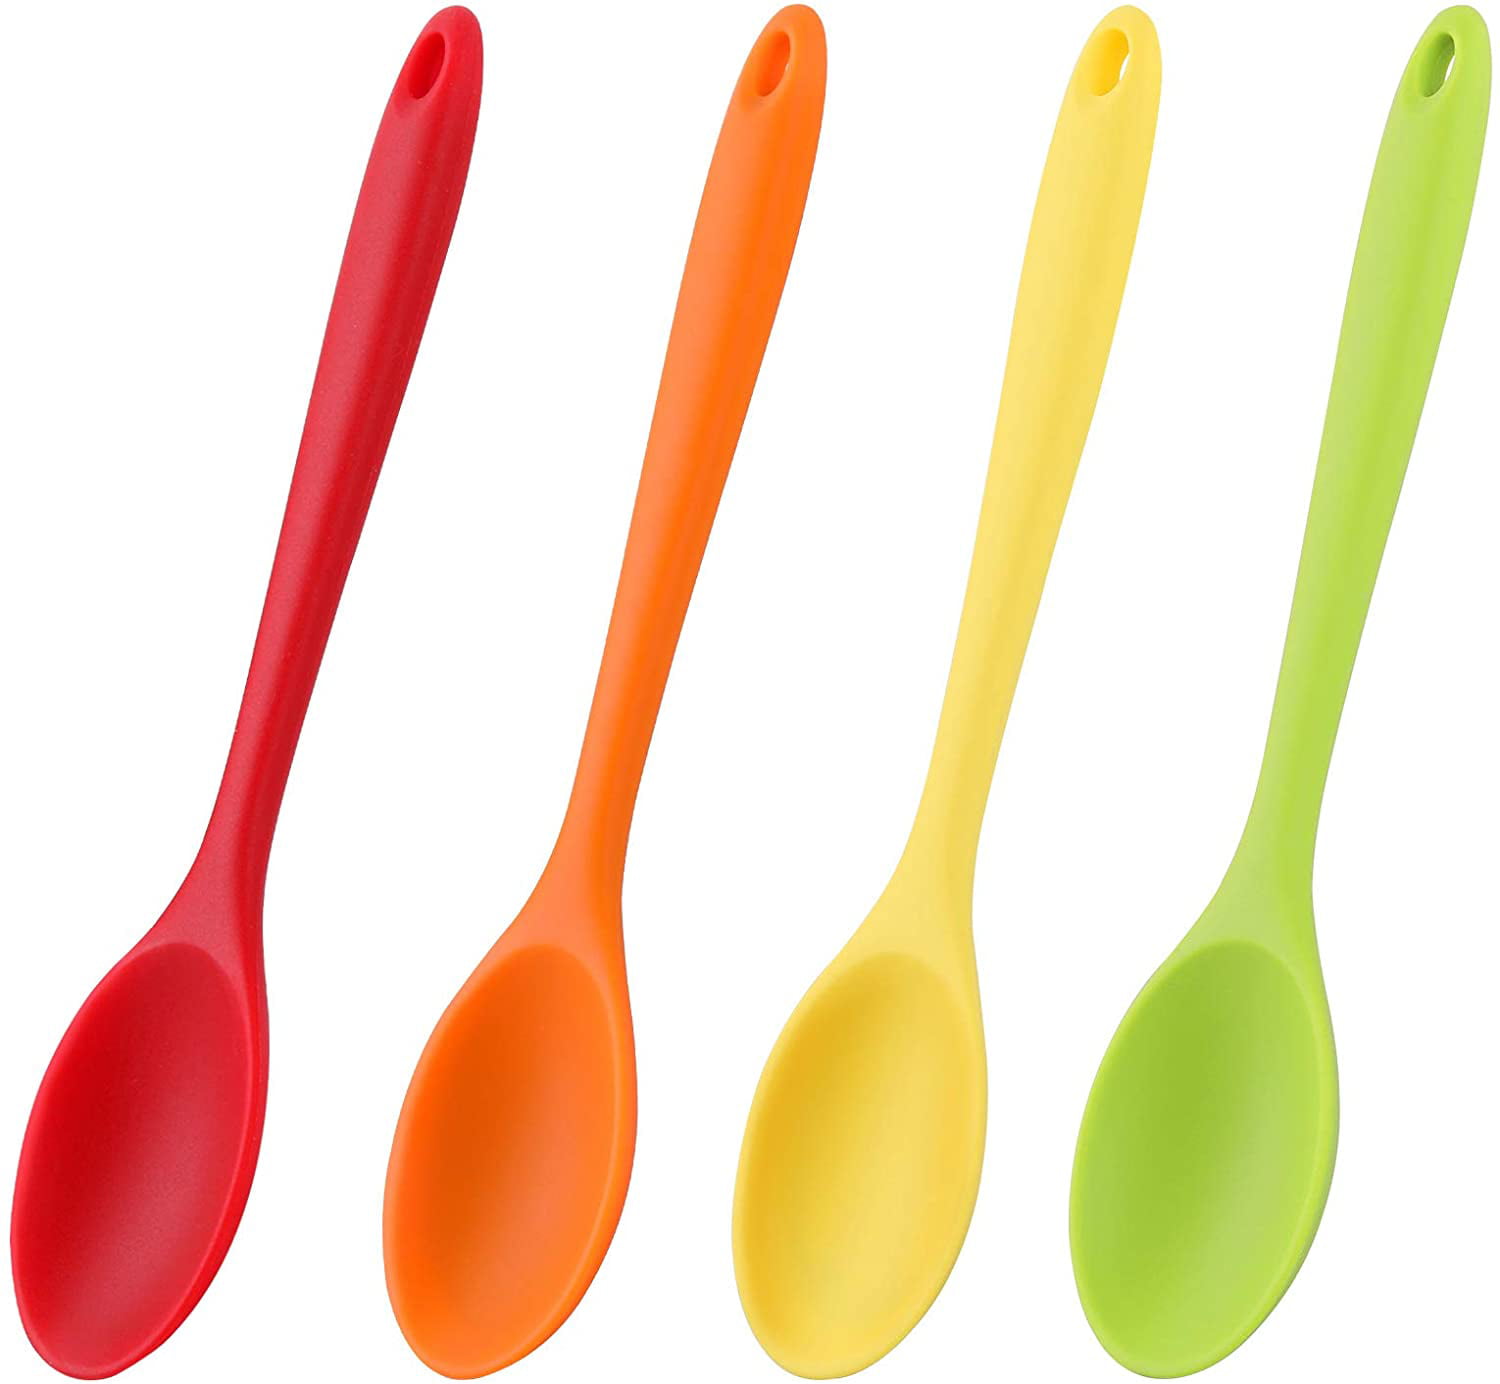 Restaurantware 10.6 inch Mixing Spoon, 1 Heat-Resistant Silicone Cooking Spoon - Non-Toxic, Nylon Core, Black Silicone Mixing Spoons for Cooking, Dishwasher-Safe, Fo